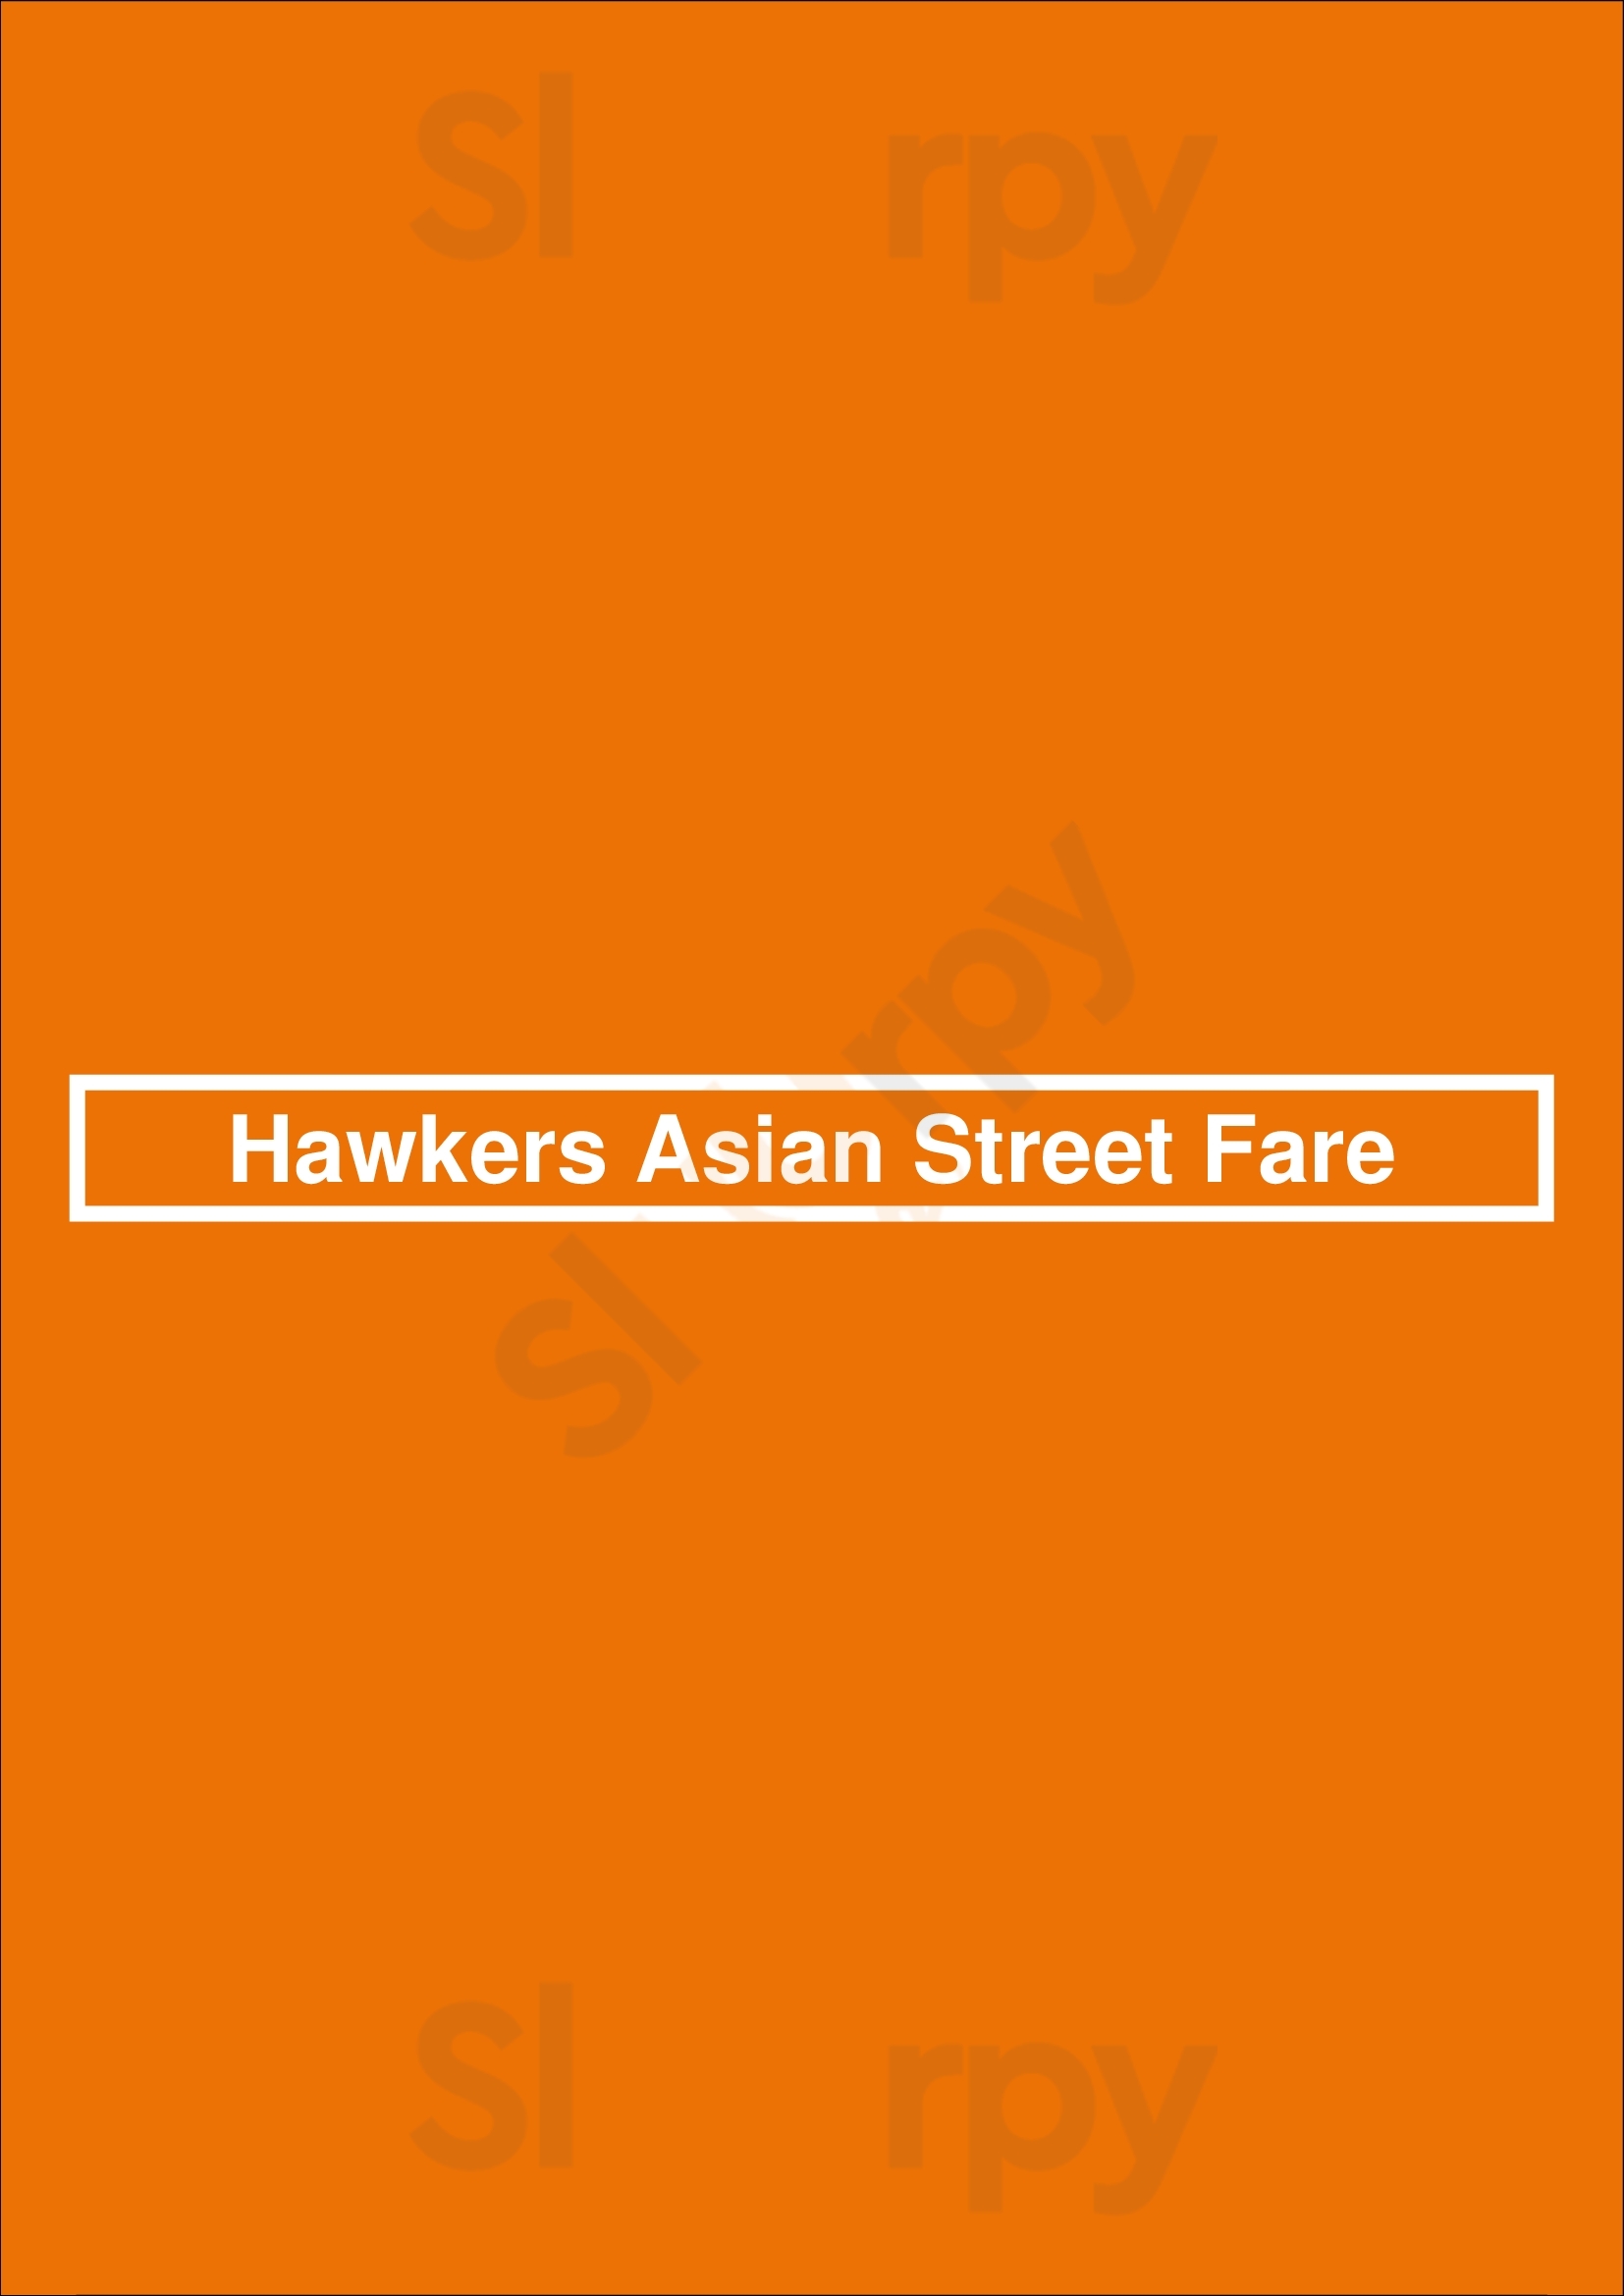 Hawkers Asian Street Fare Jacksonville Menu - 1